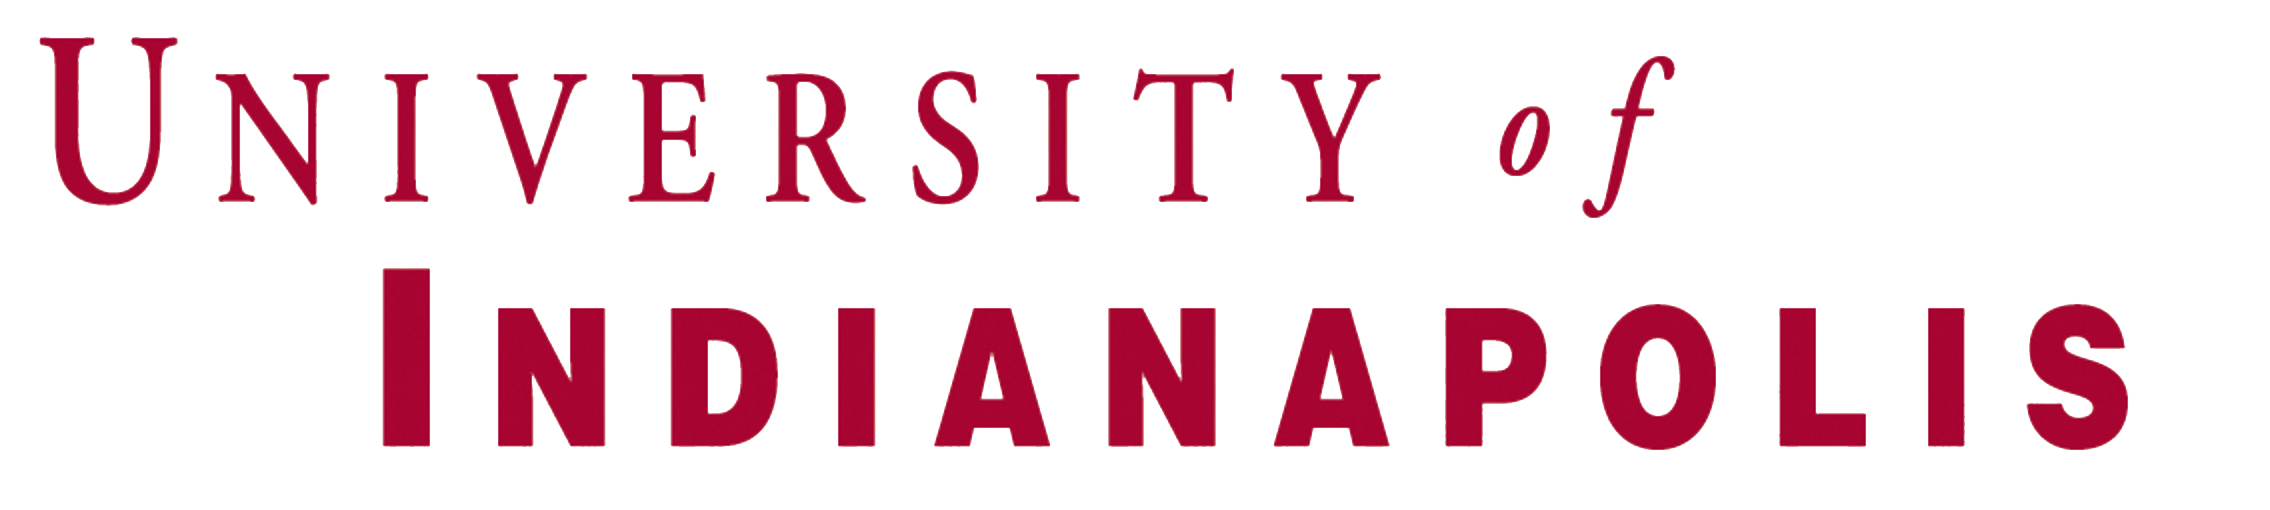 University of Indianapolis logo in crimson red